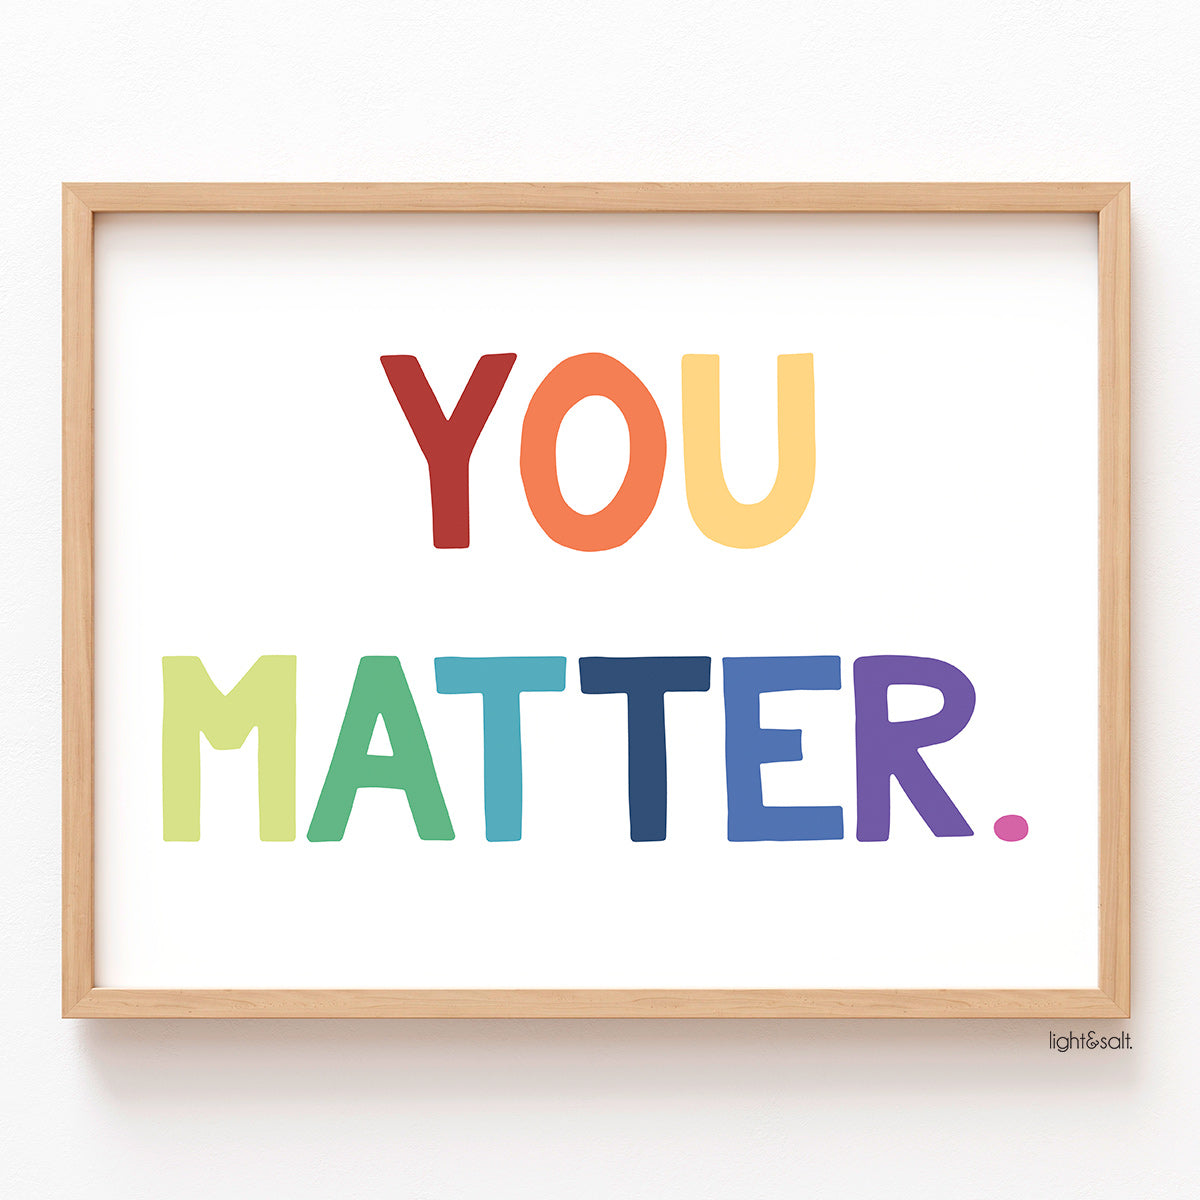 You matter poster